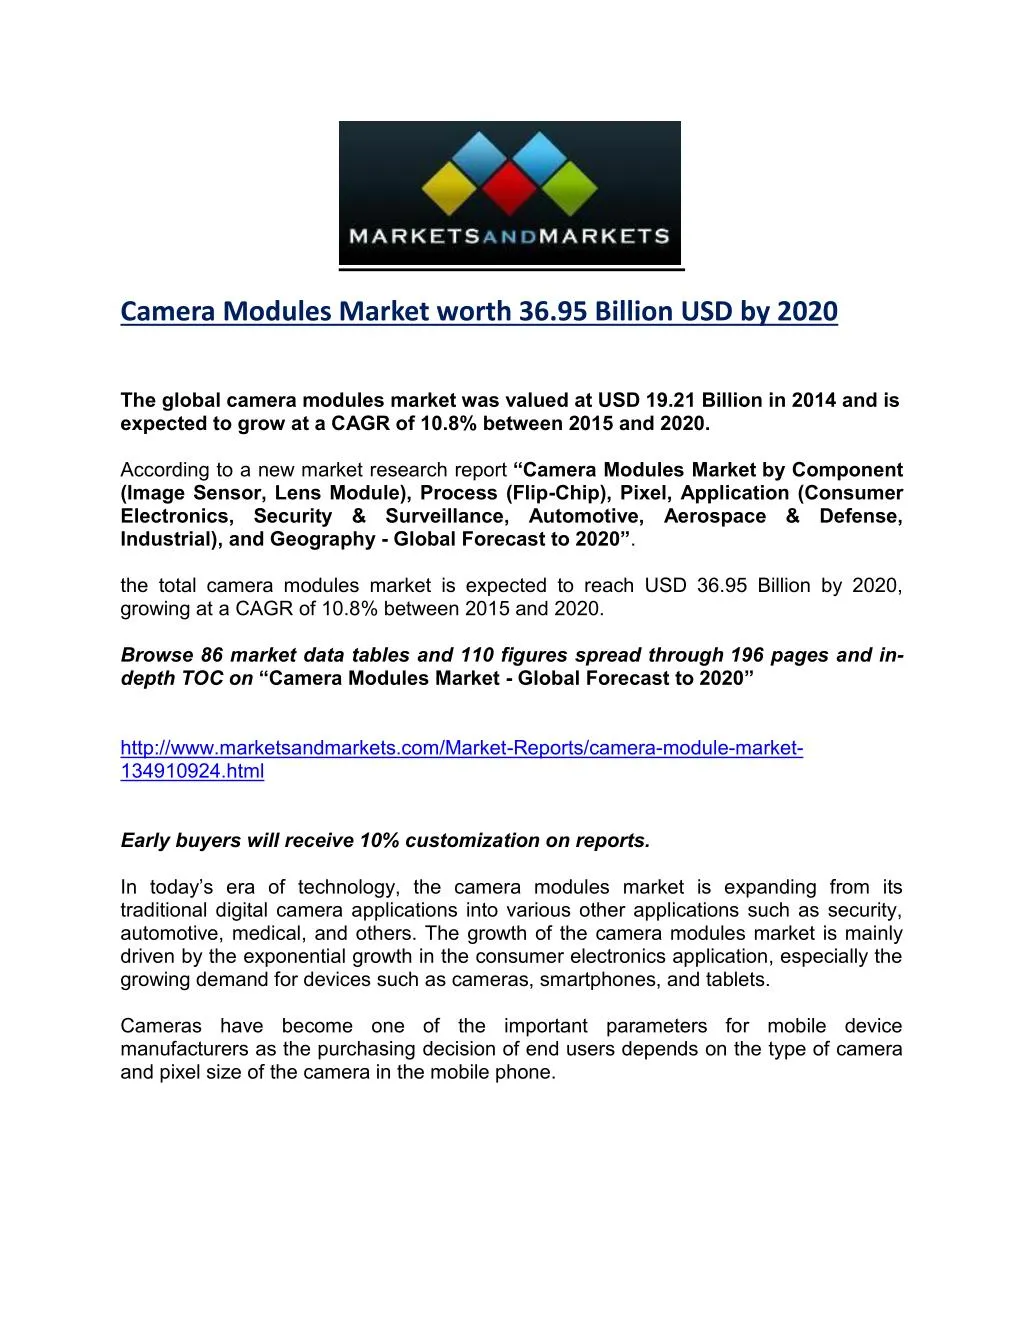 ca era modules market worth 9 billio usd by 0 0